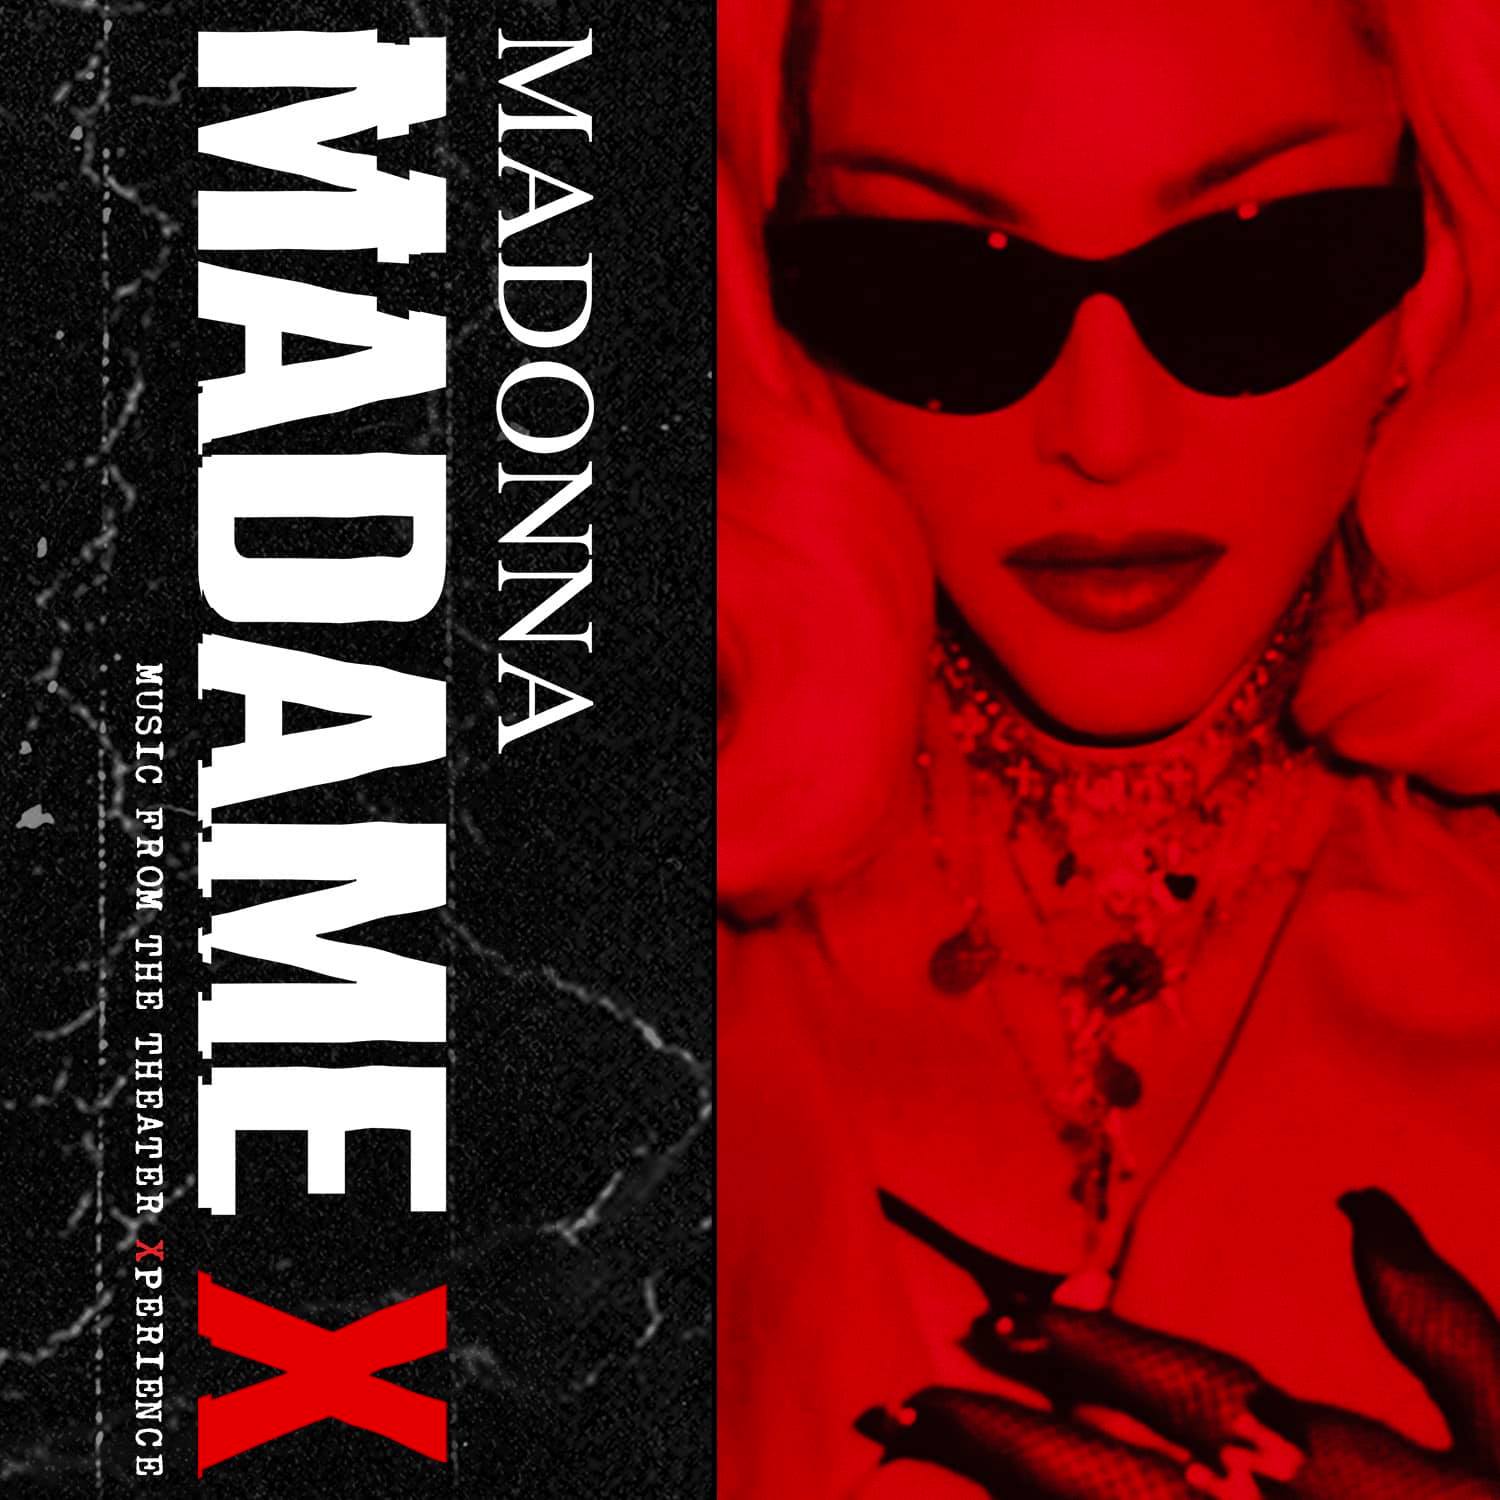 madonna-madame-x-live-album-thatgrapejuice-2021-cover.jpg